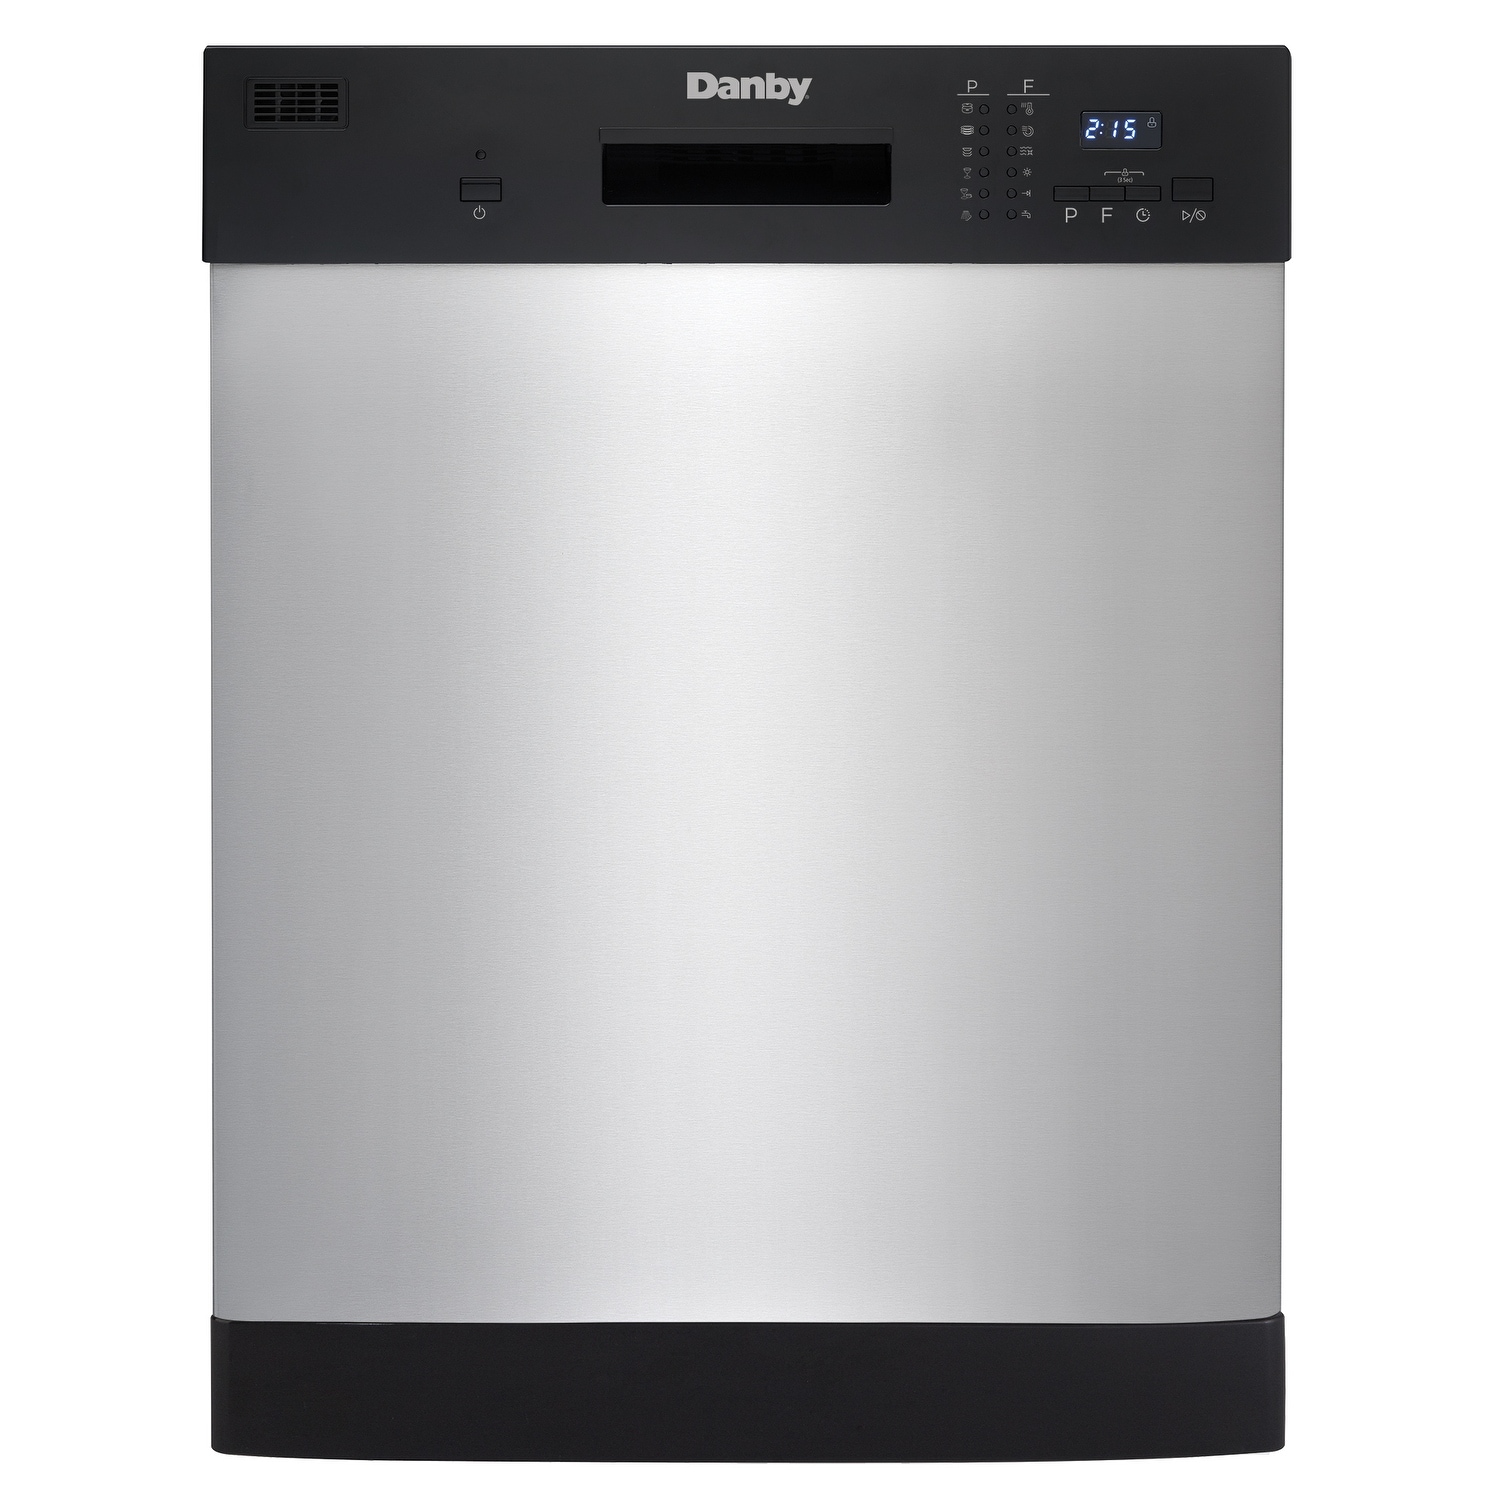 Danby 24" Stainless Full Size Dishwasher DDW2404EBSS